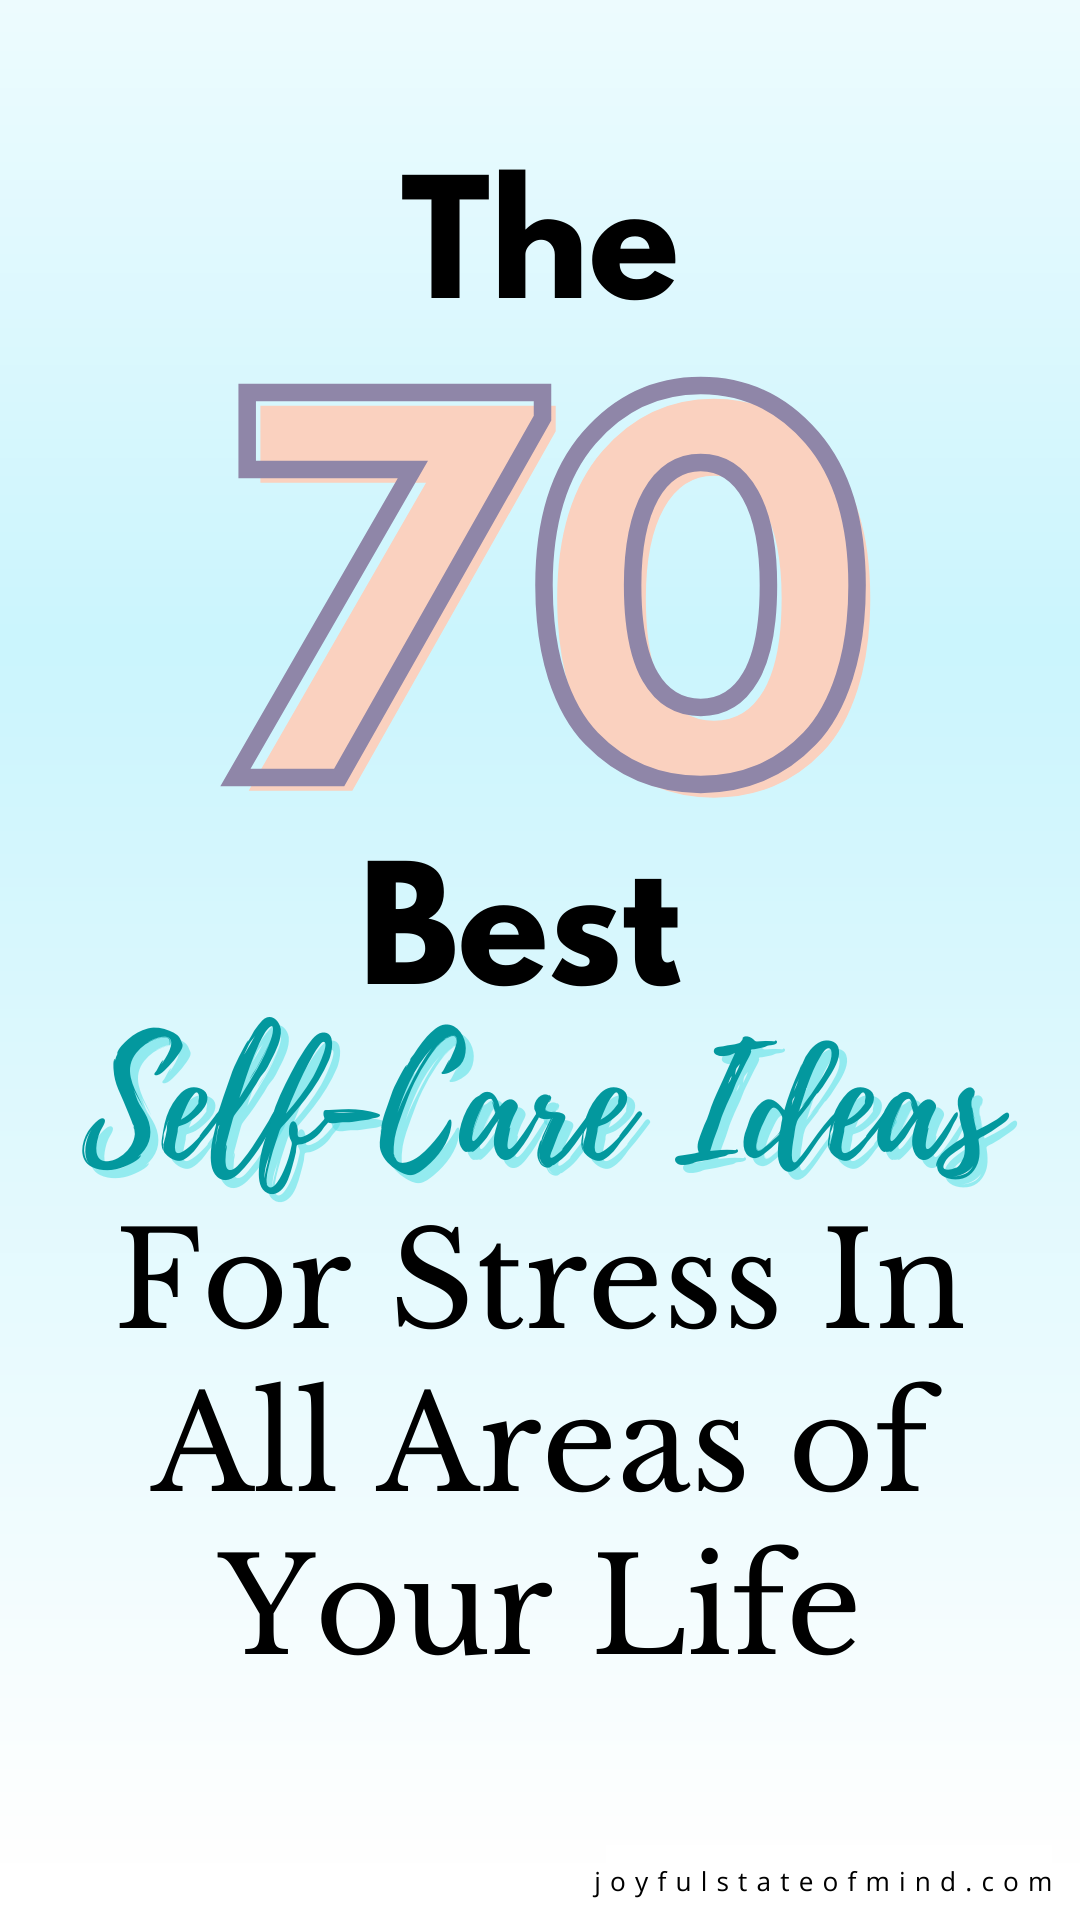 self-care ideas for stress